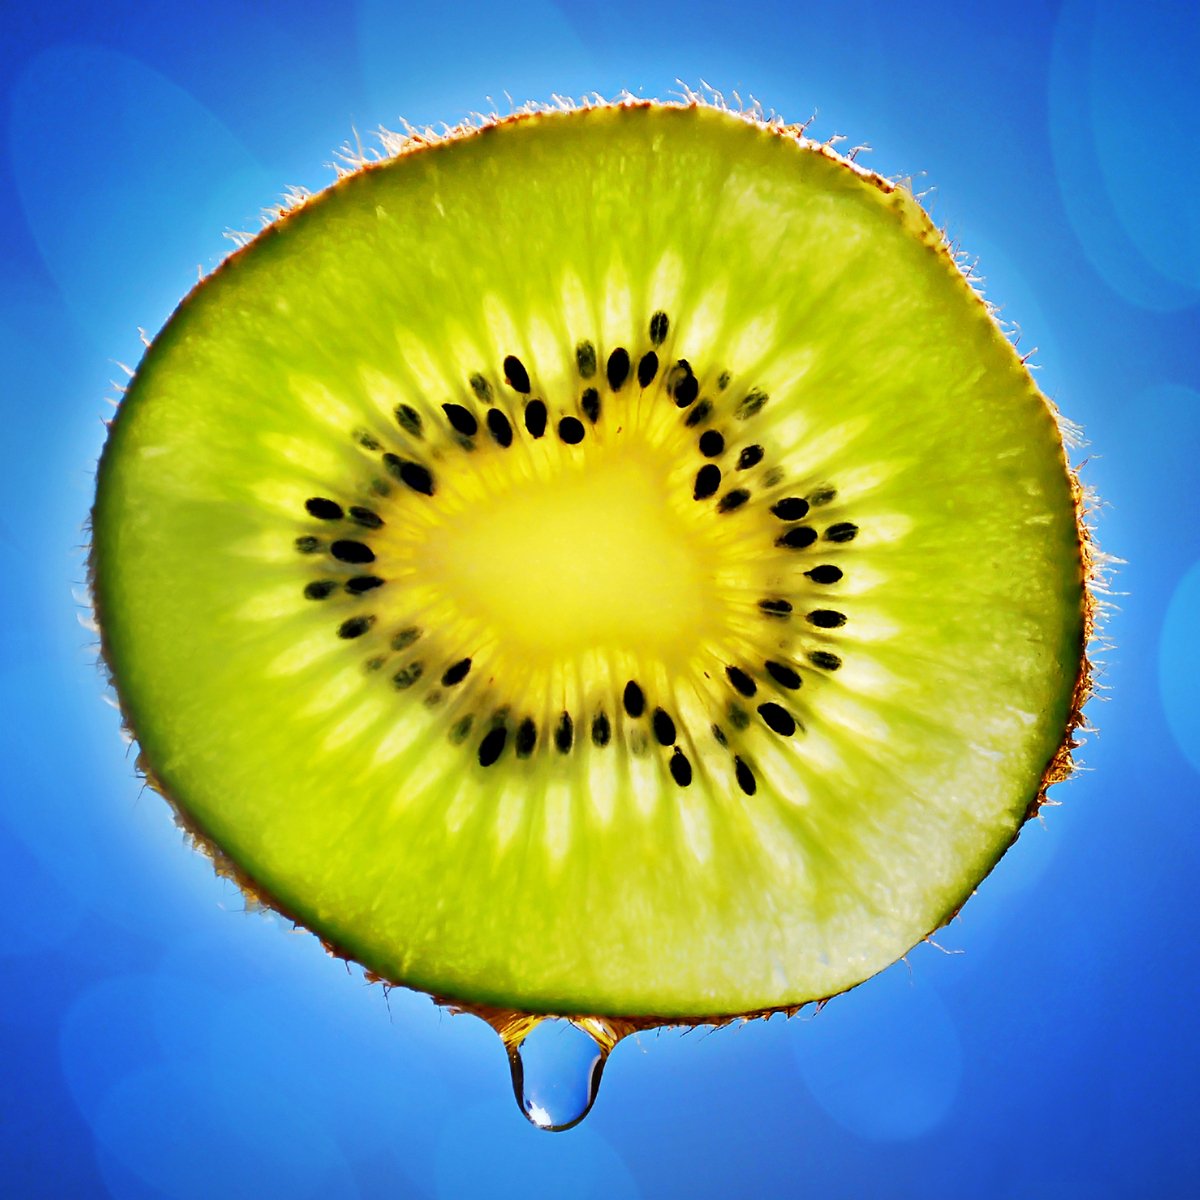 a slice of kiwi fruit on a blue background